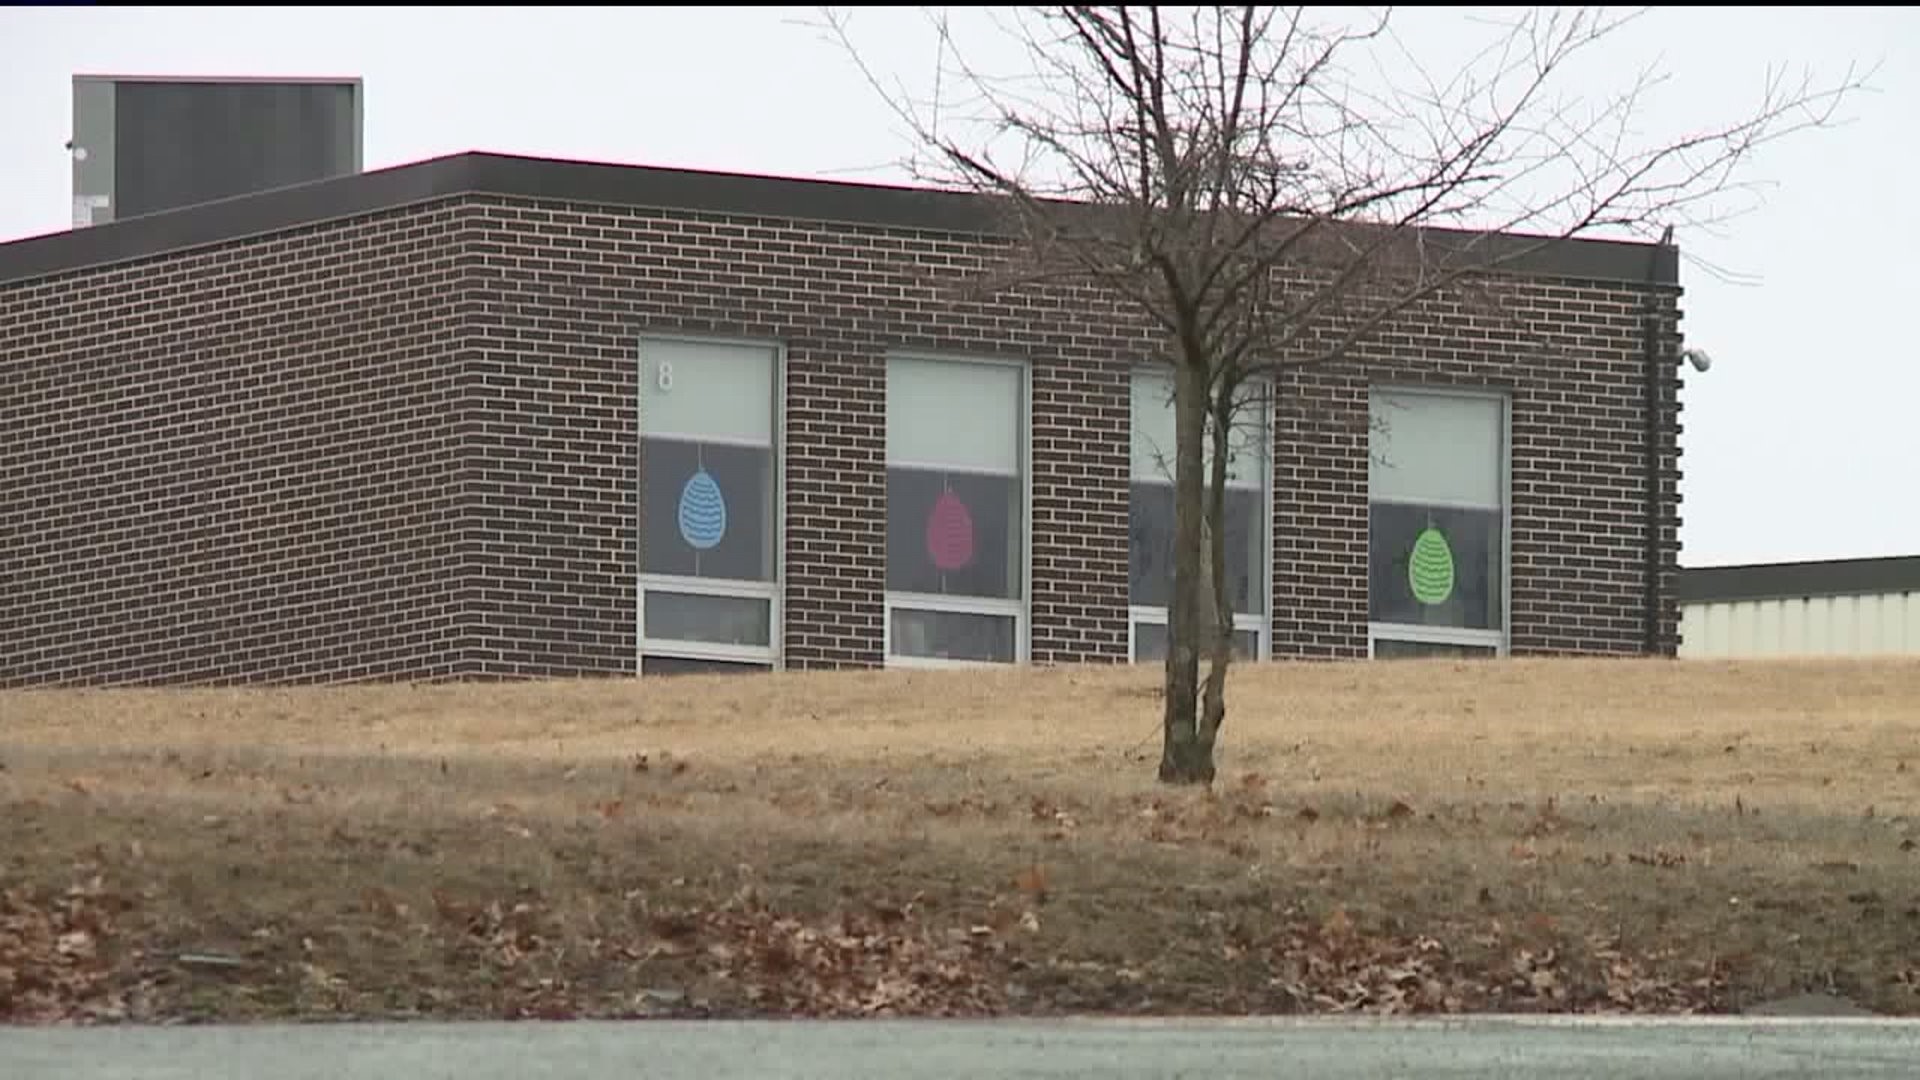 Parents on Alert after Threatening Message Found in Elementary School